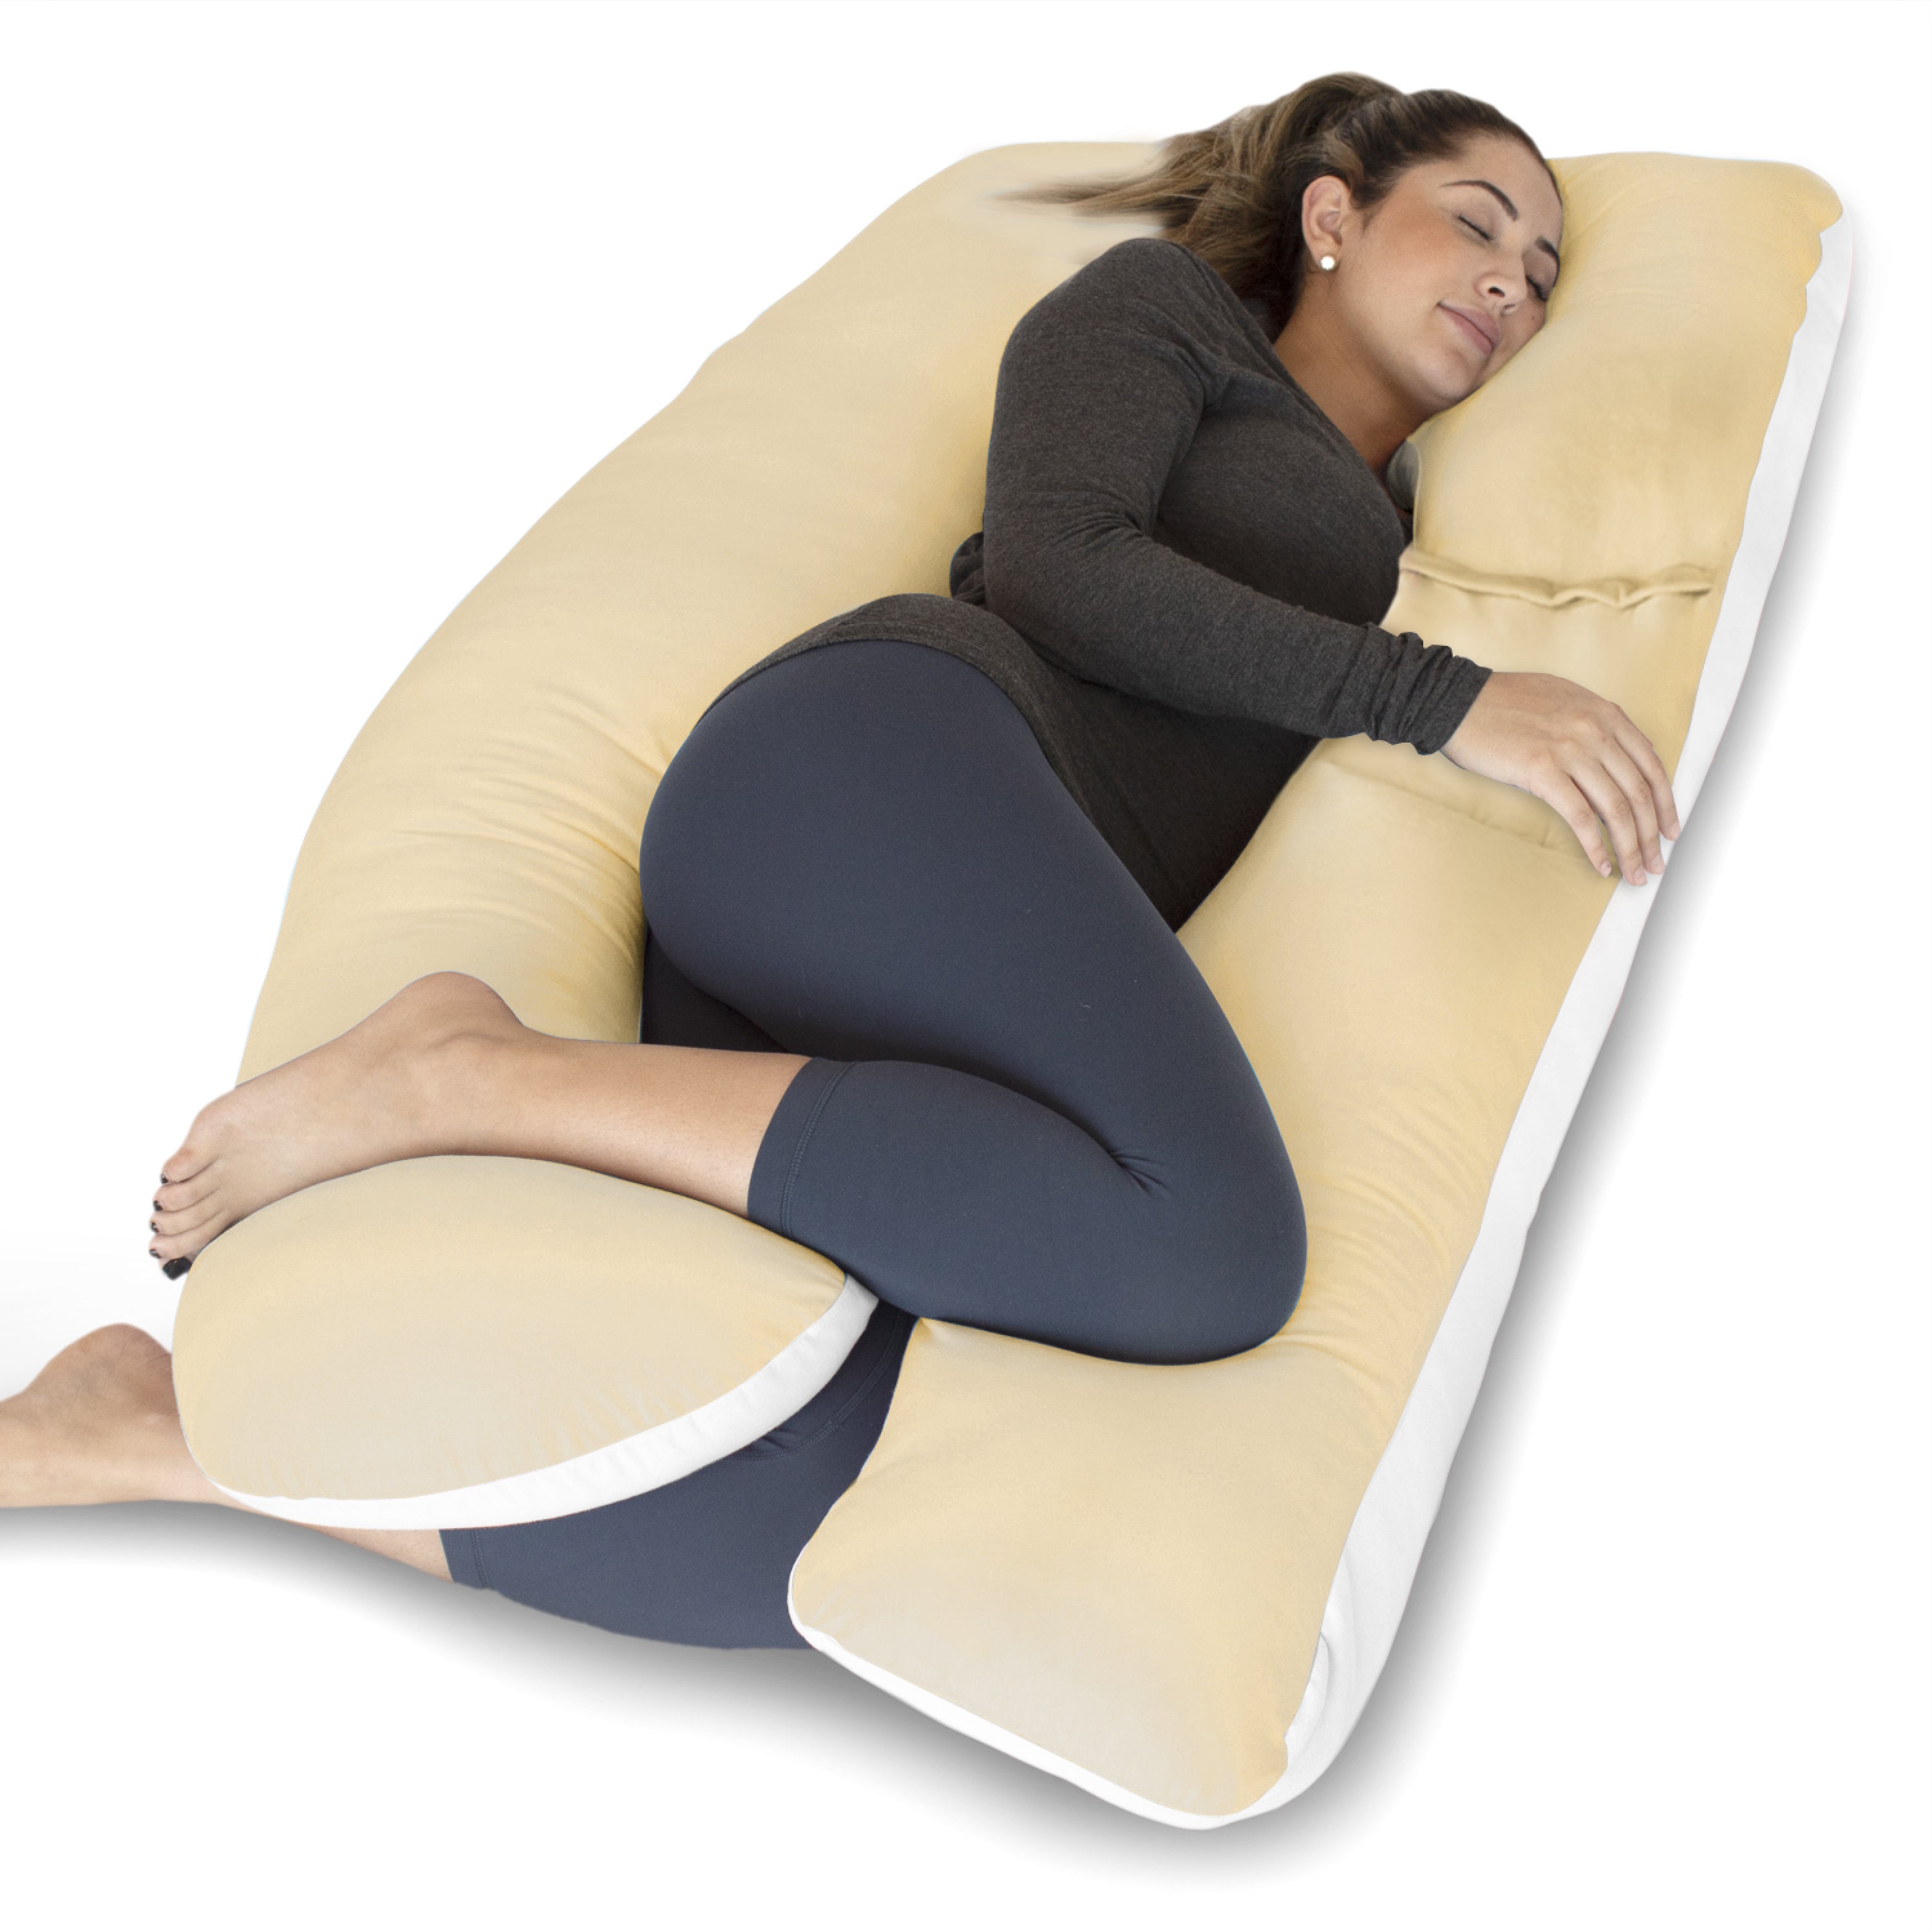 UPedic Body Pillow – Doctor Pillow